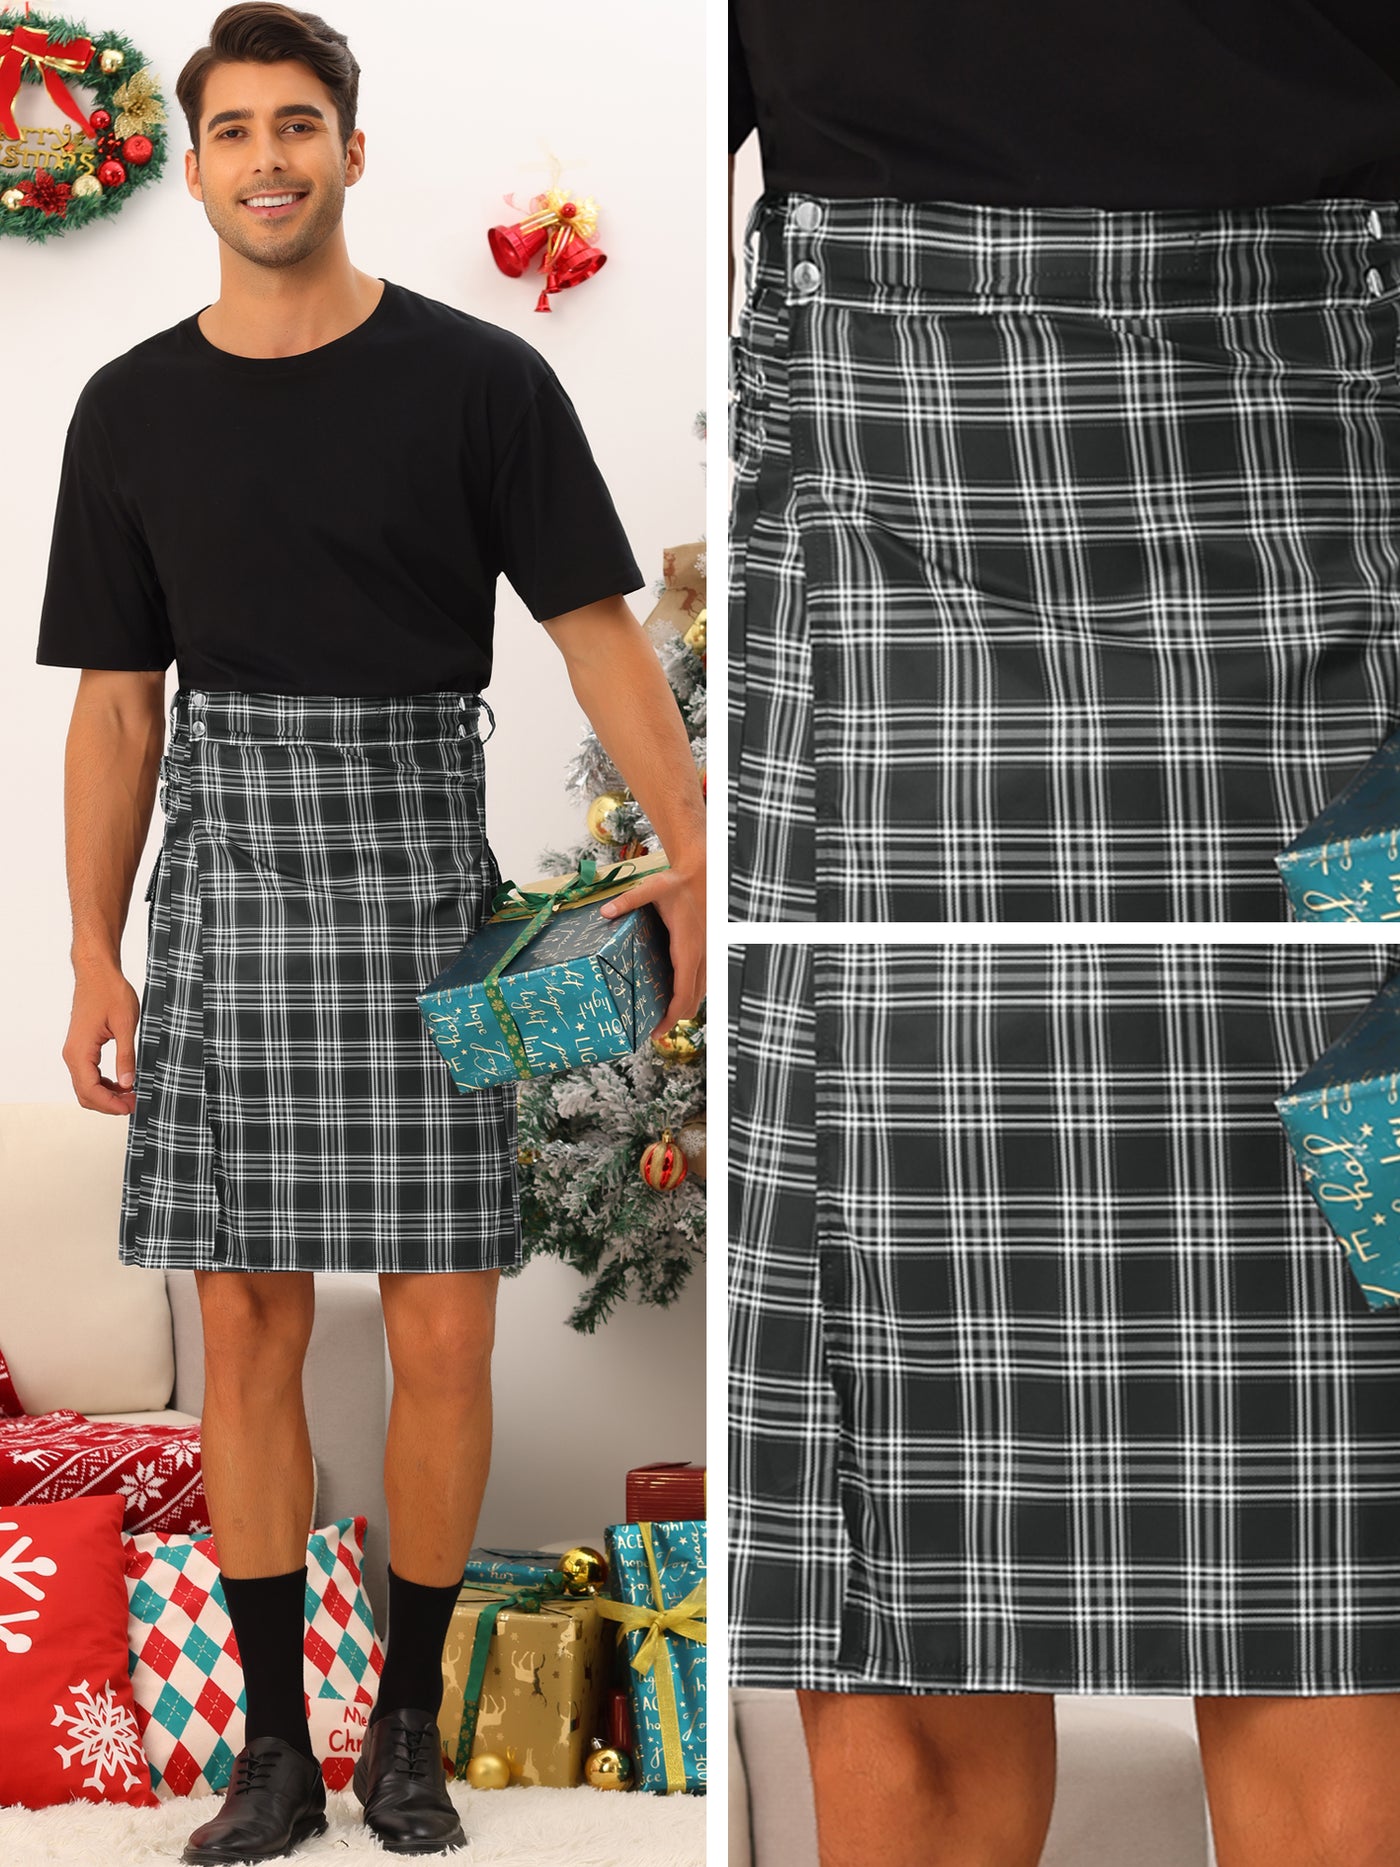 Bublédon Tartan Kilt for Men's Color Block Costume Pleated Checked Short Dress Plaid Skirt